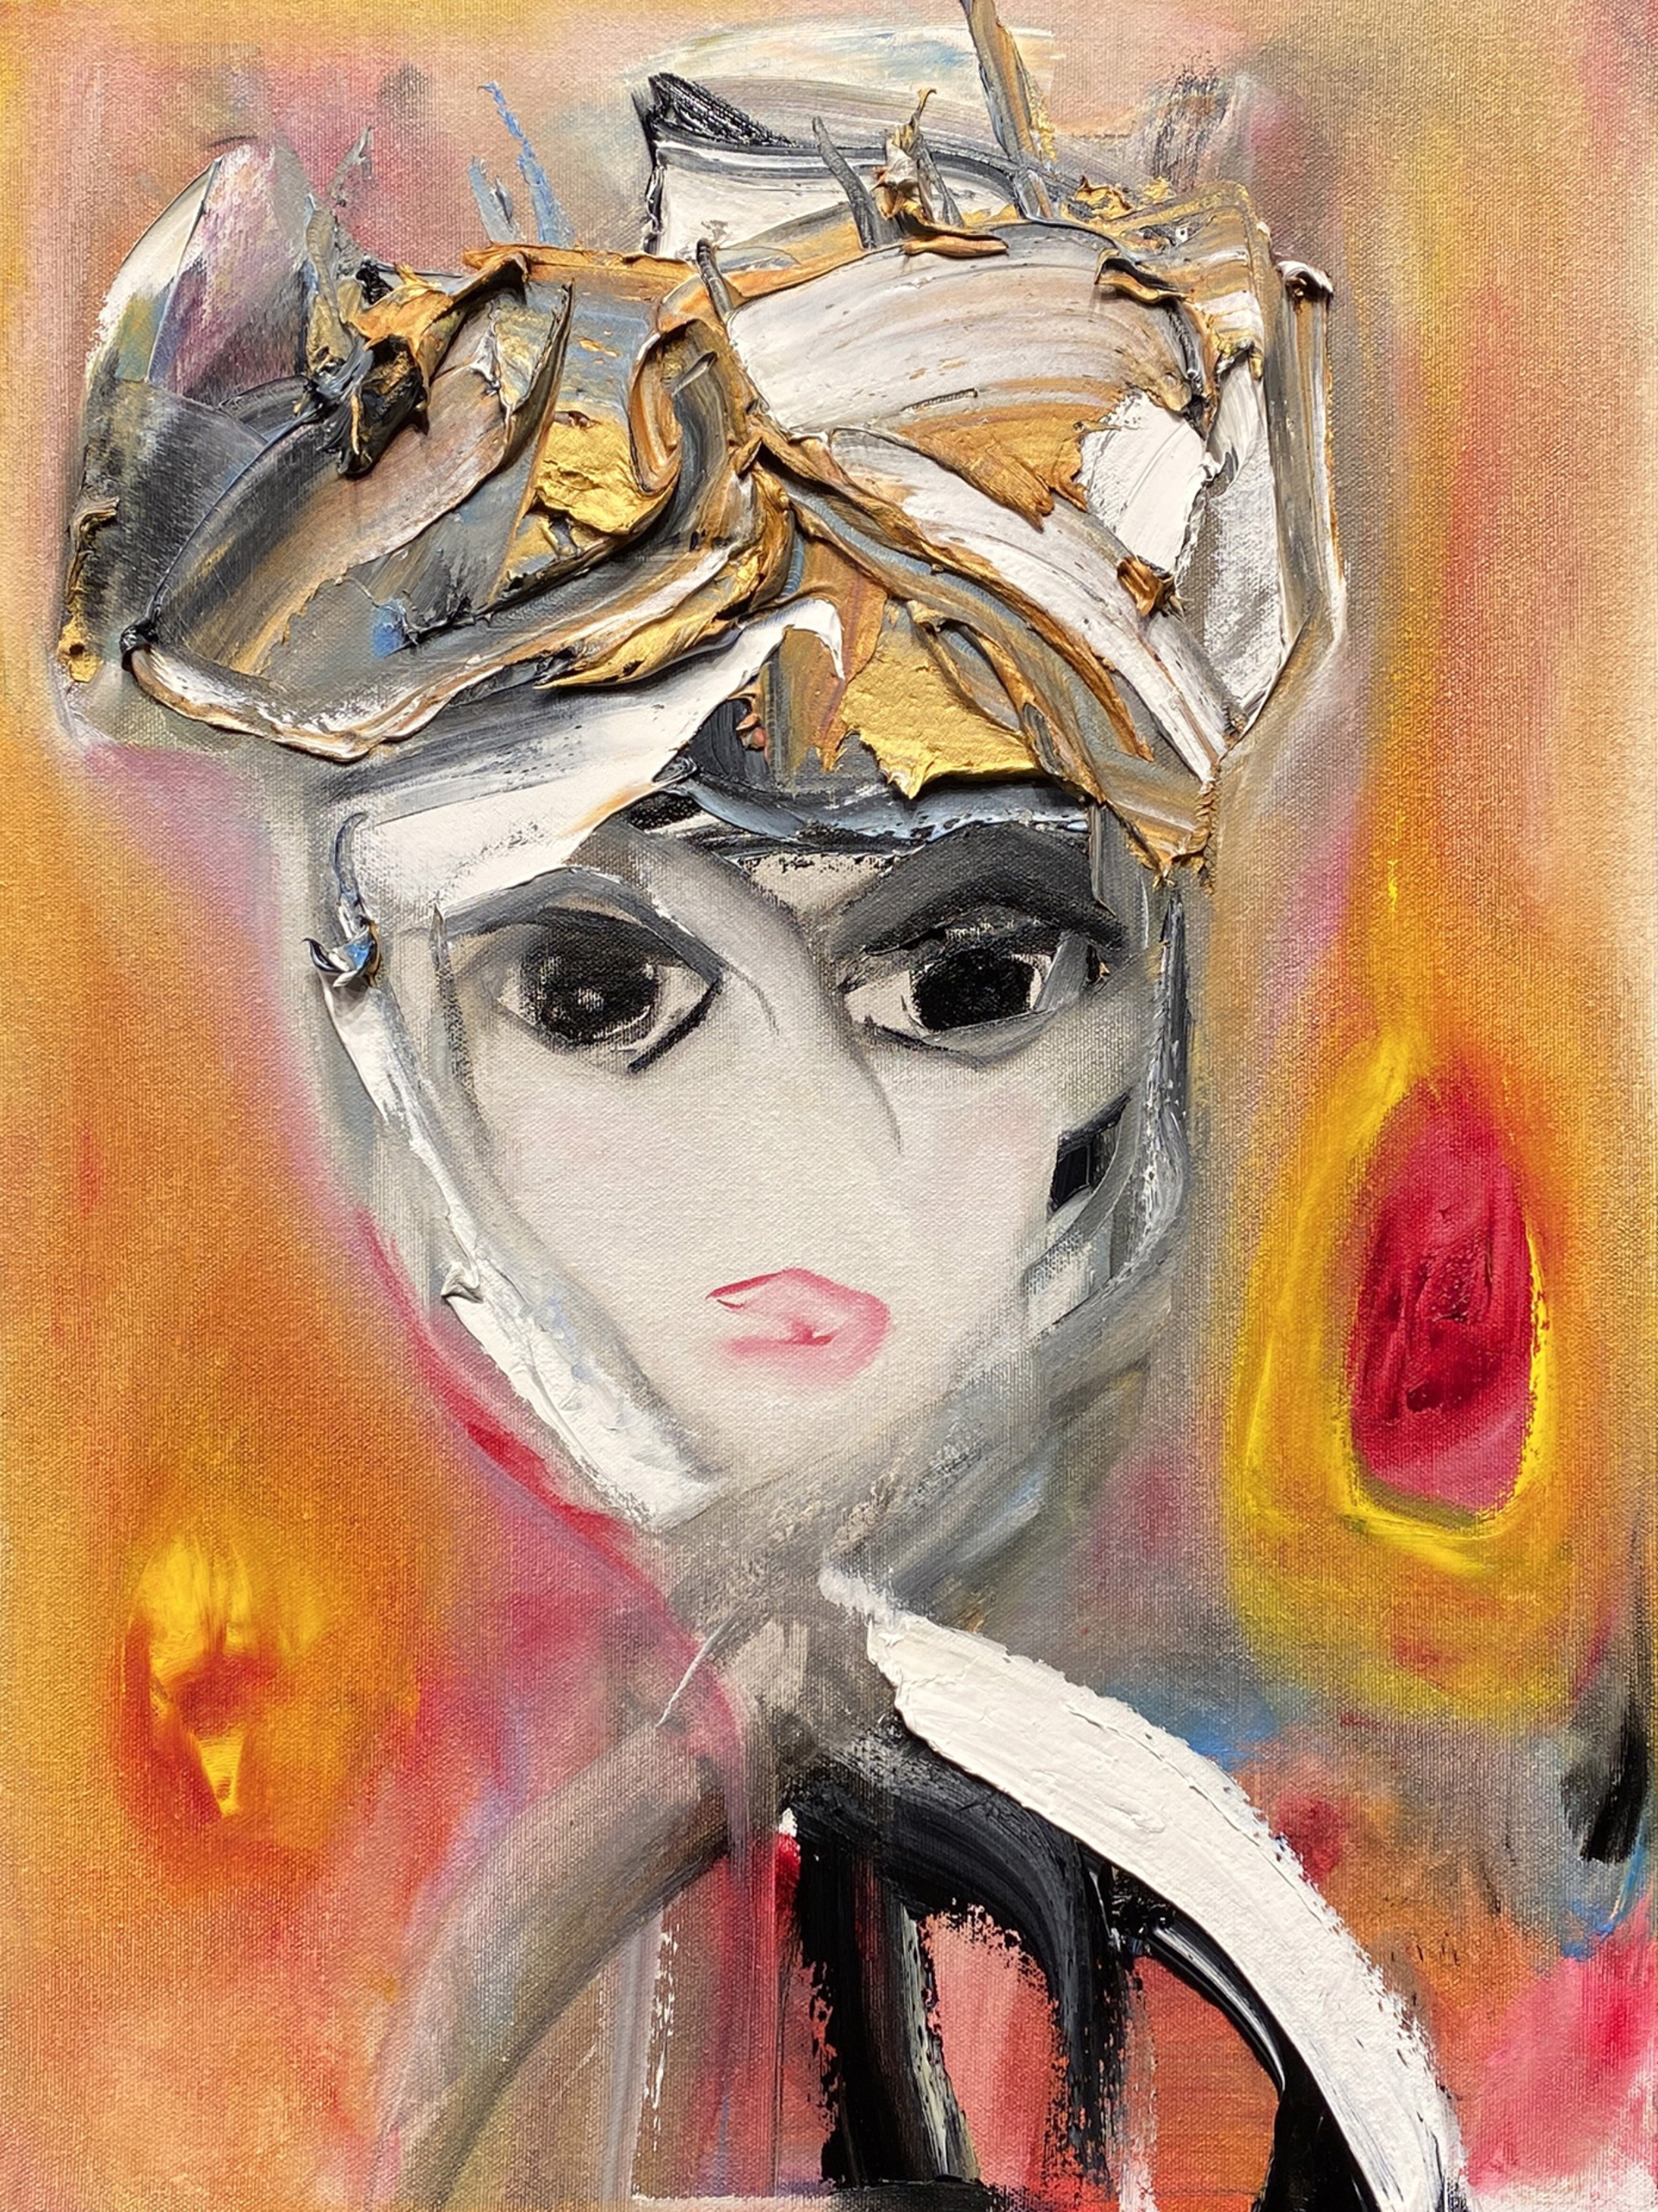 Self-Portrait Reign of Fire by Lea Fisher